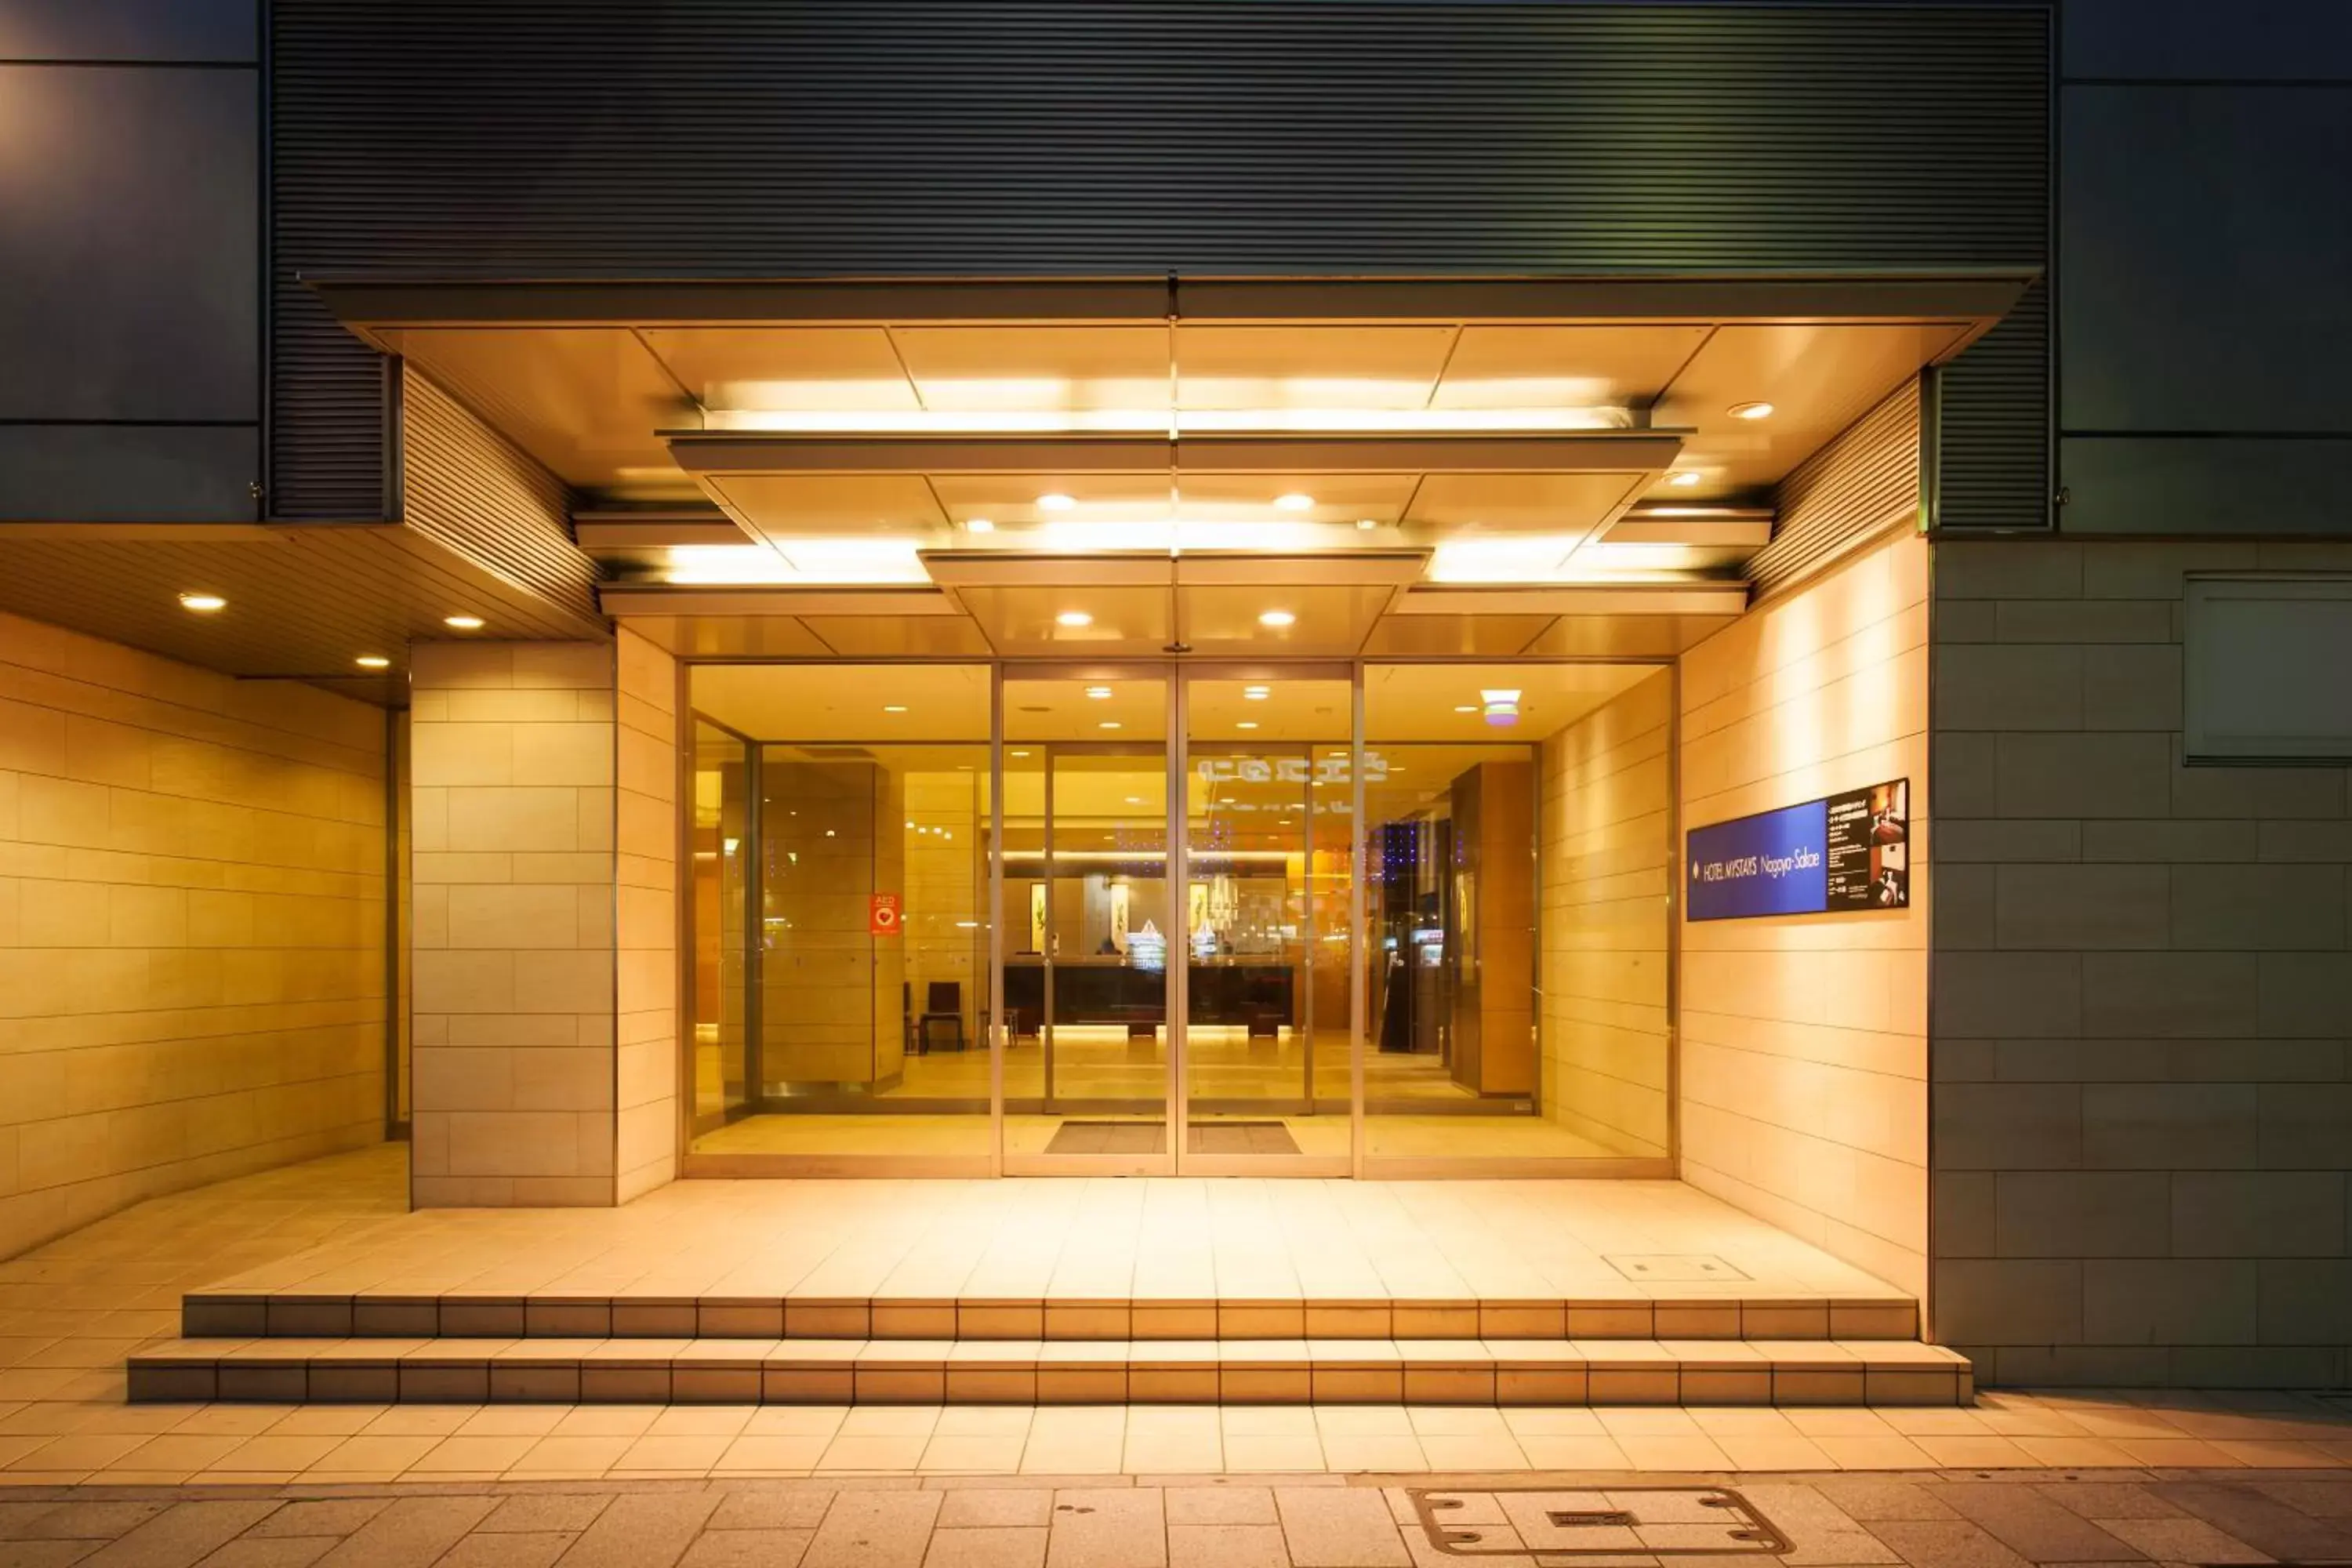 Facade/entrance in HOTEL MYSTAYS Nagoya Sakae